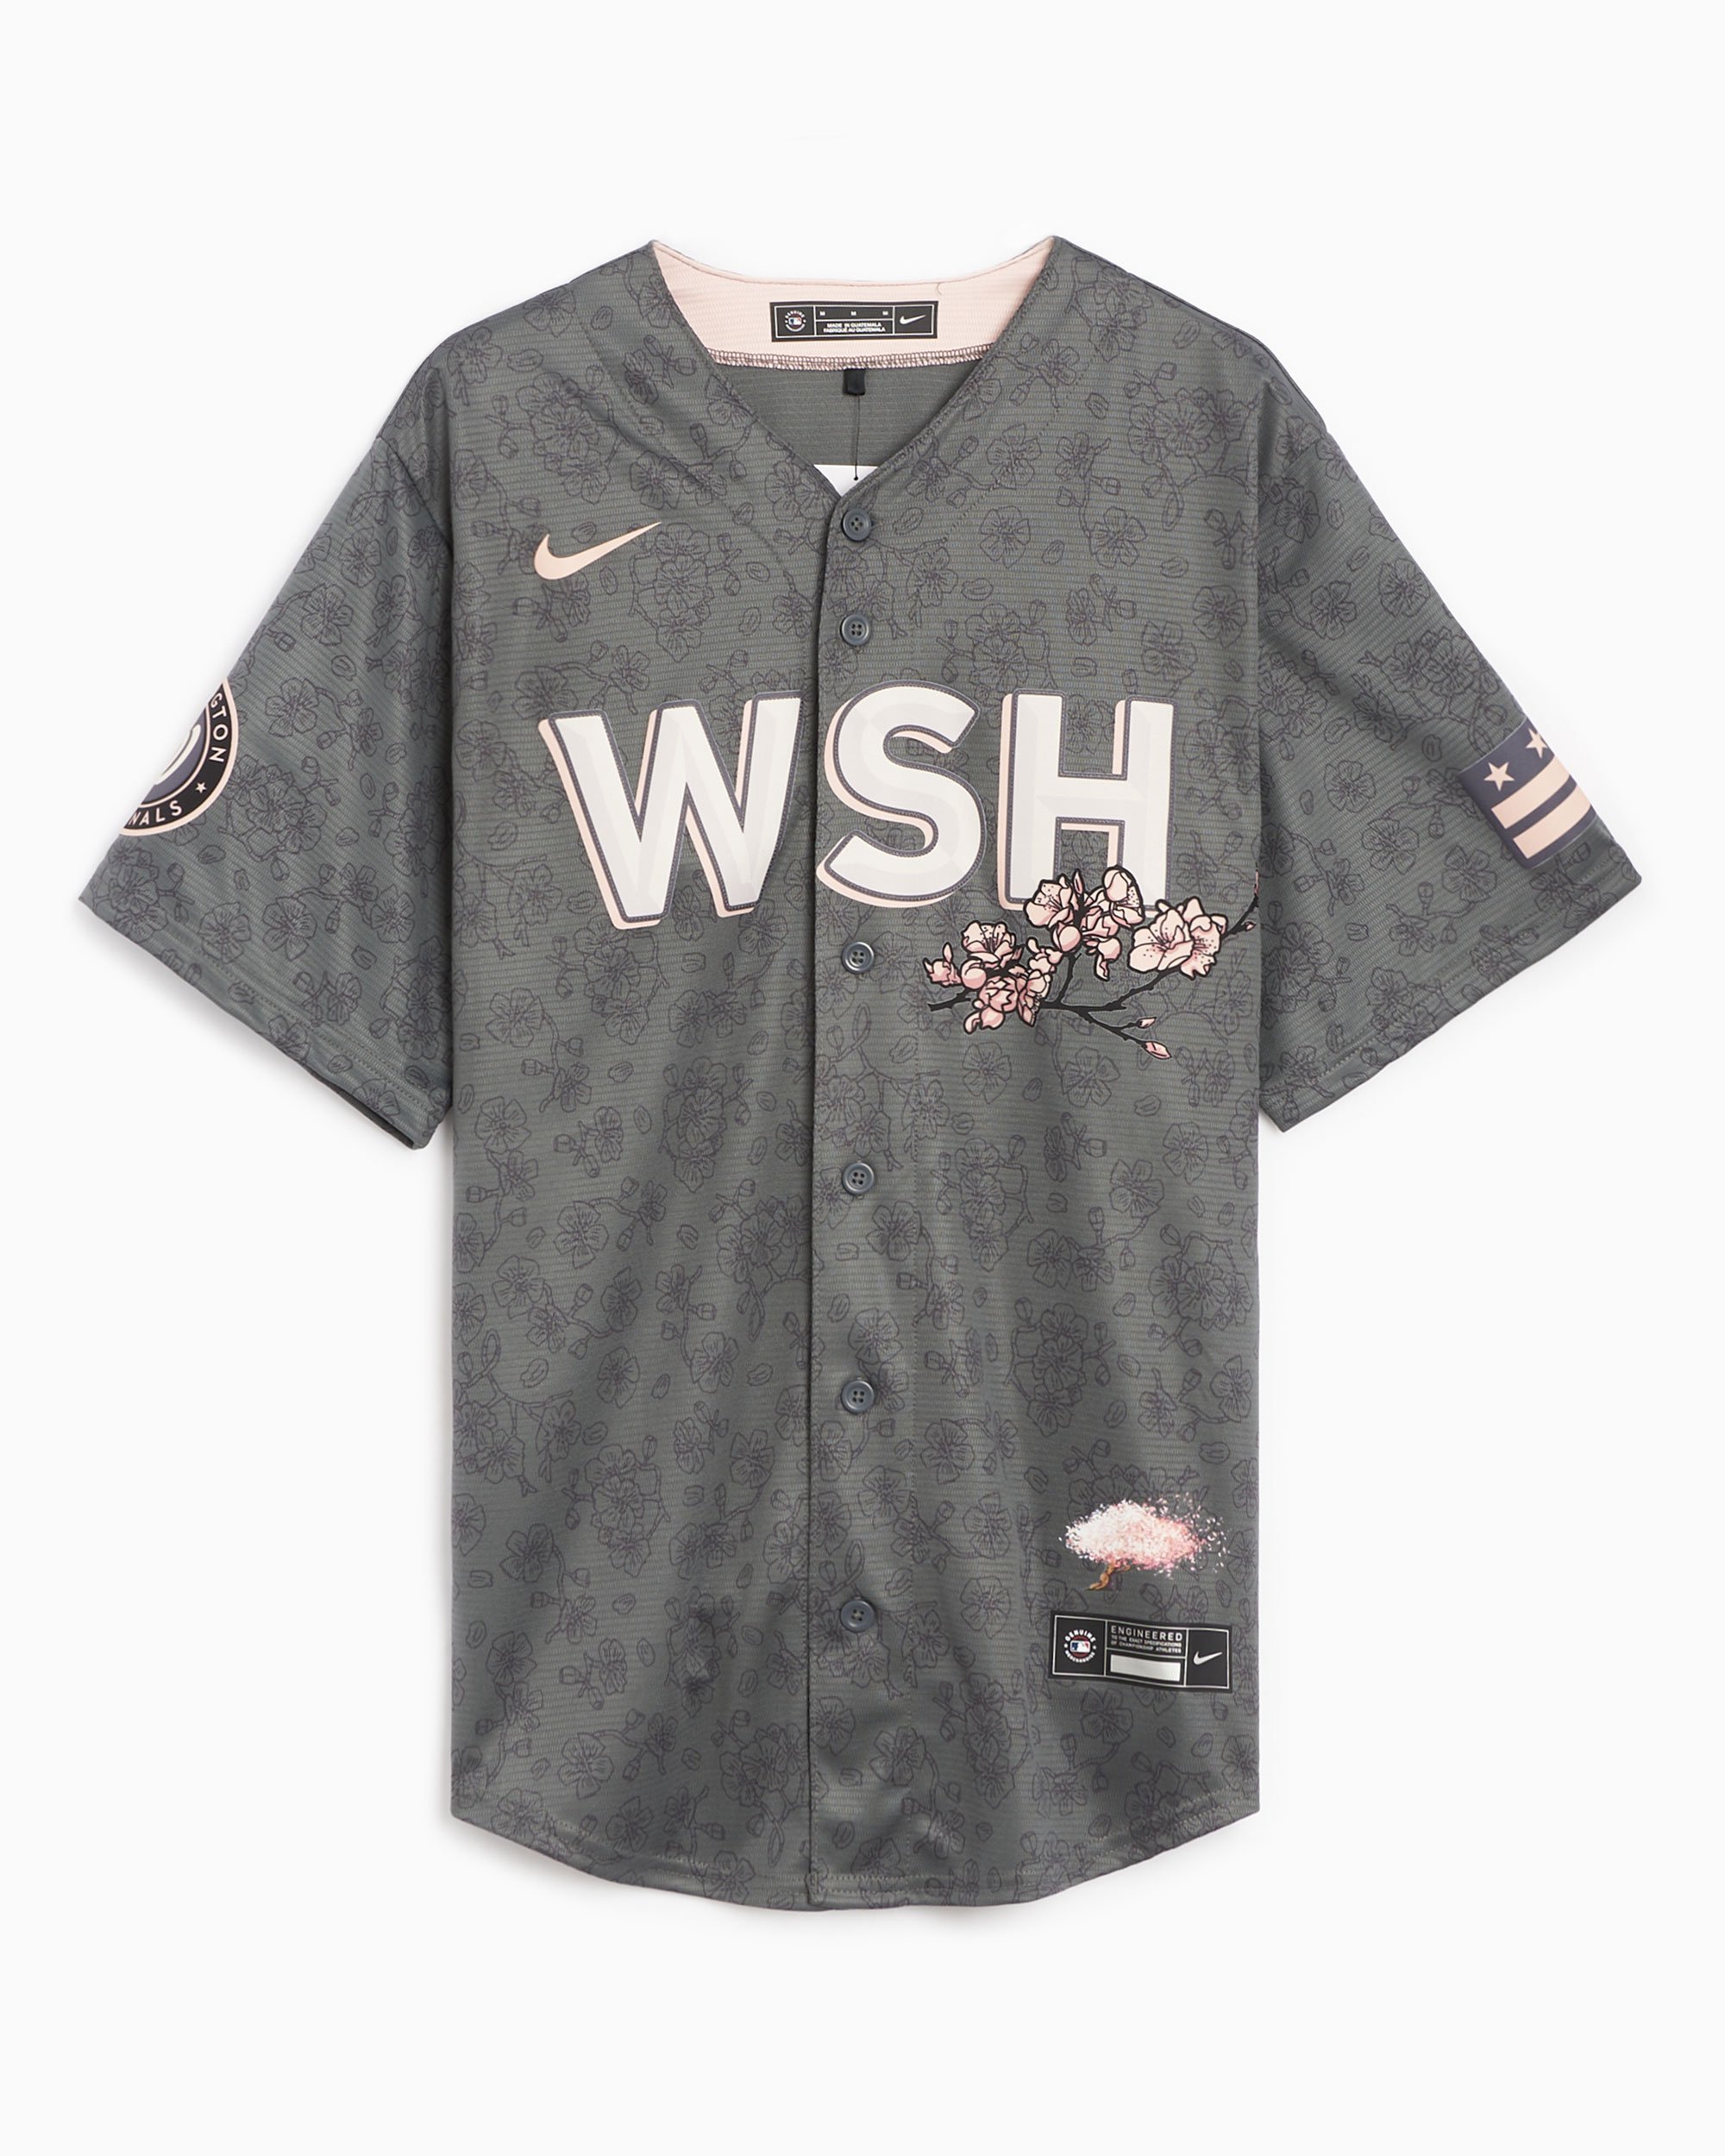 Nike City Connect Wordmark (MLB Washington Nationals) Men's T-Shirt